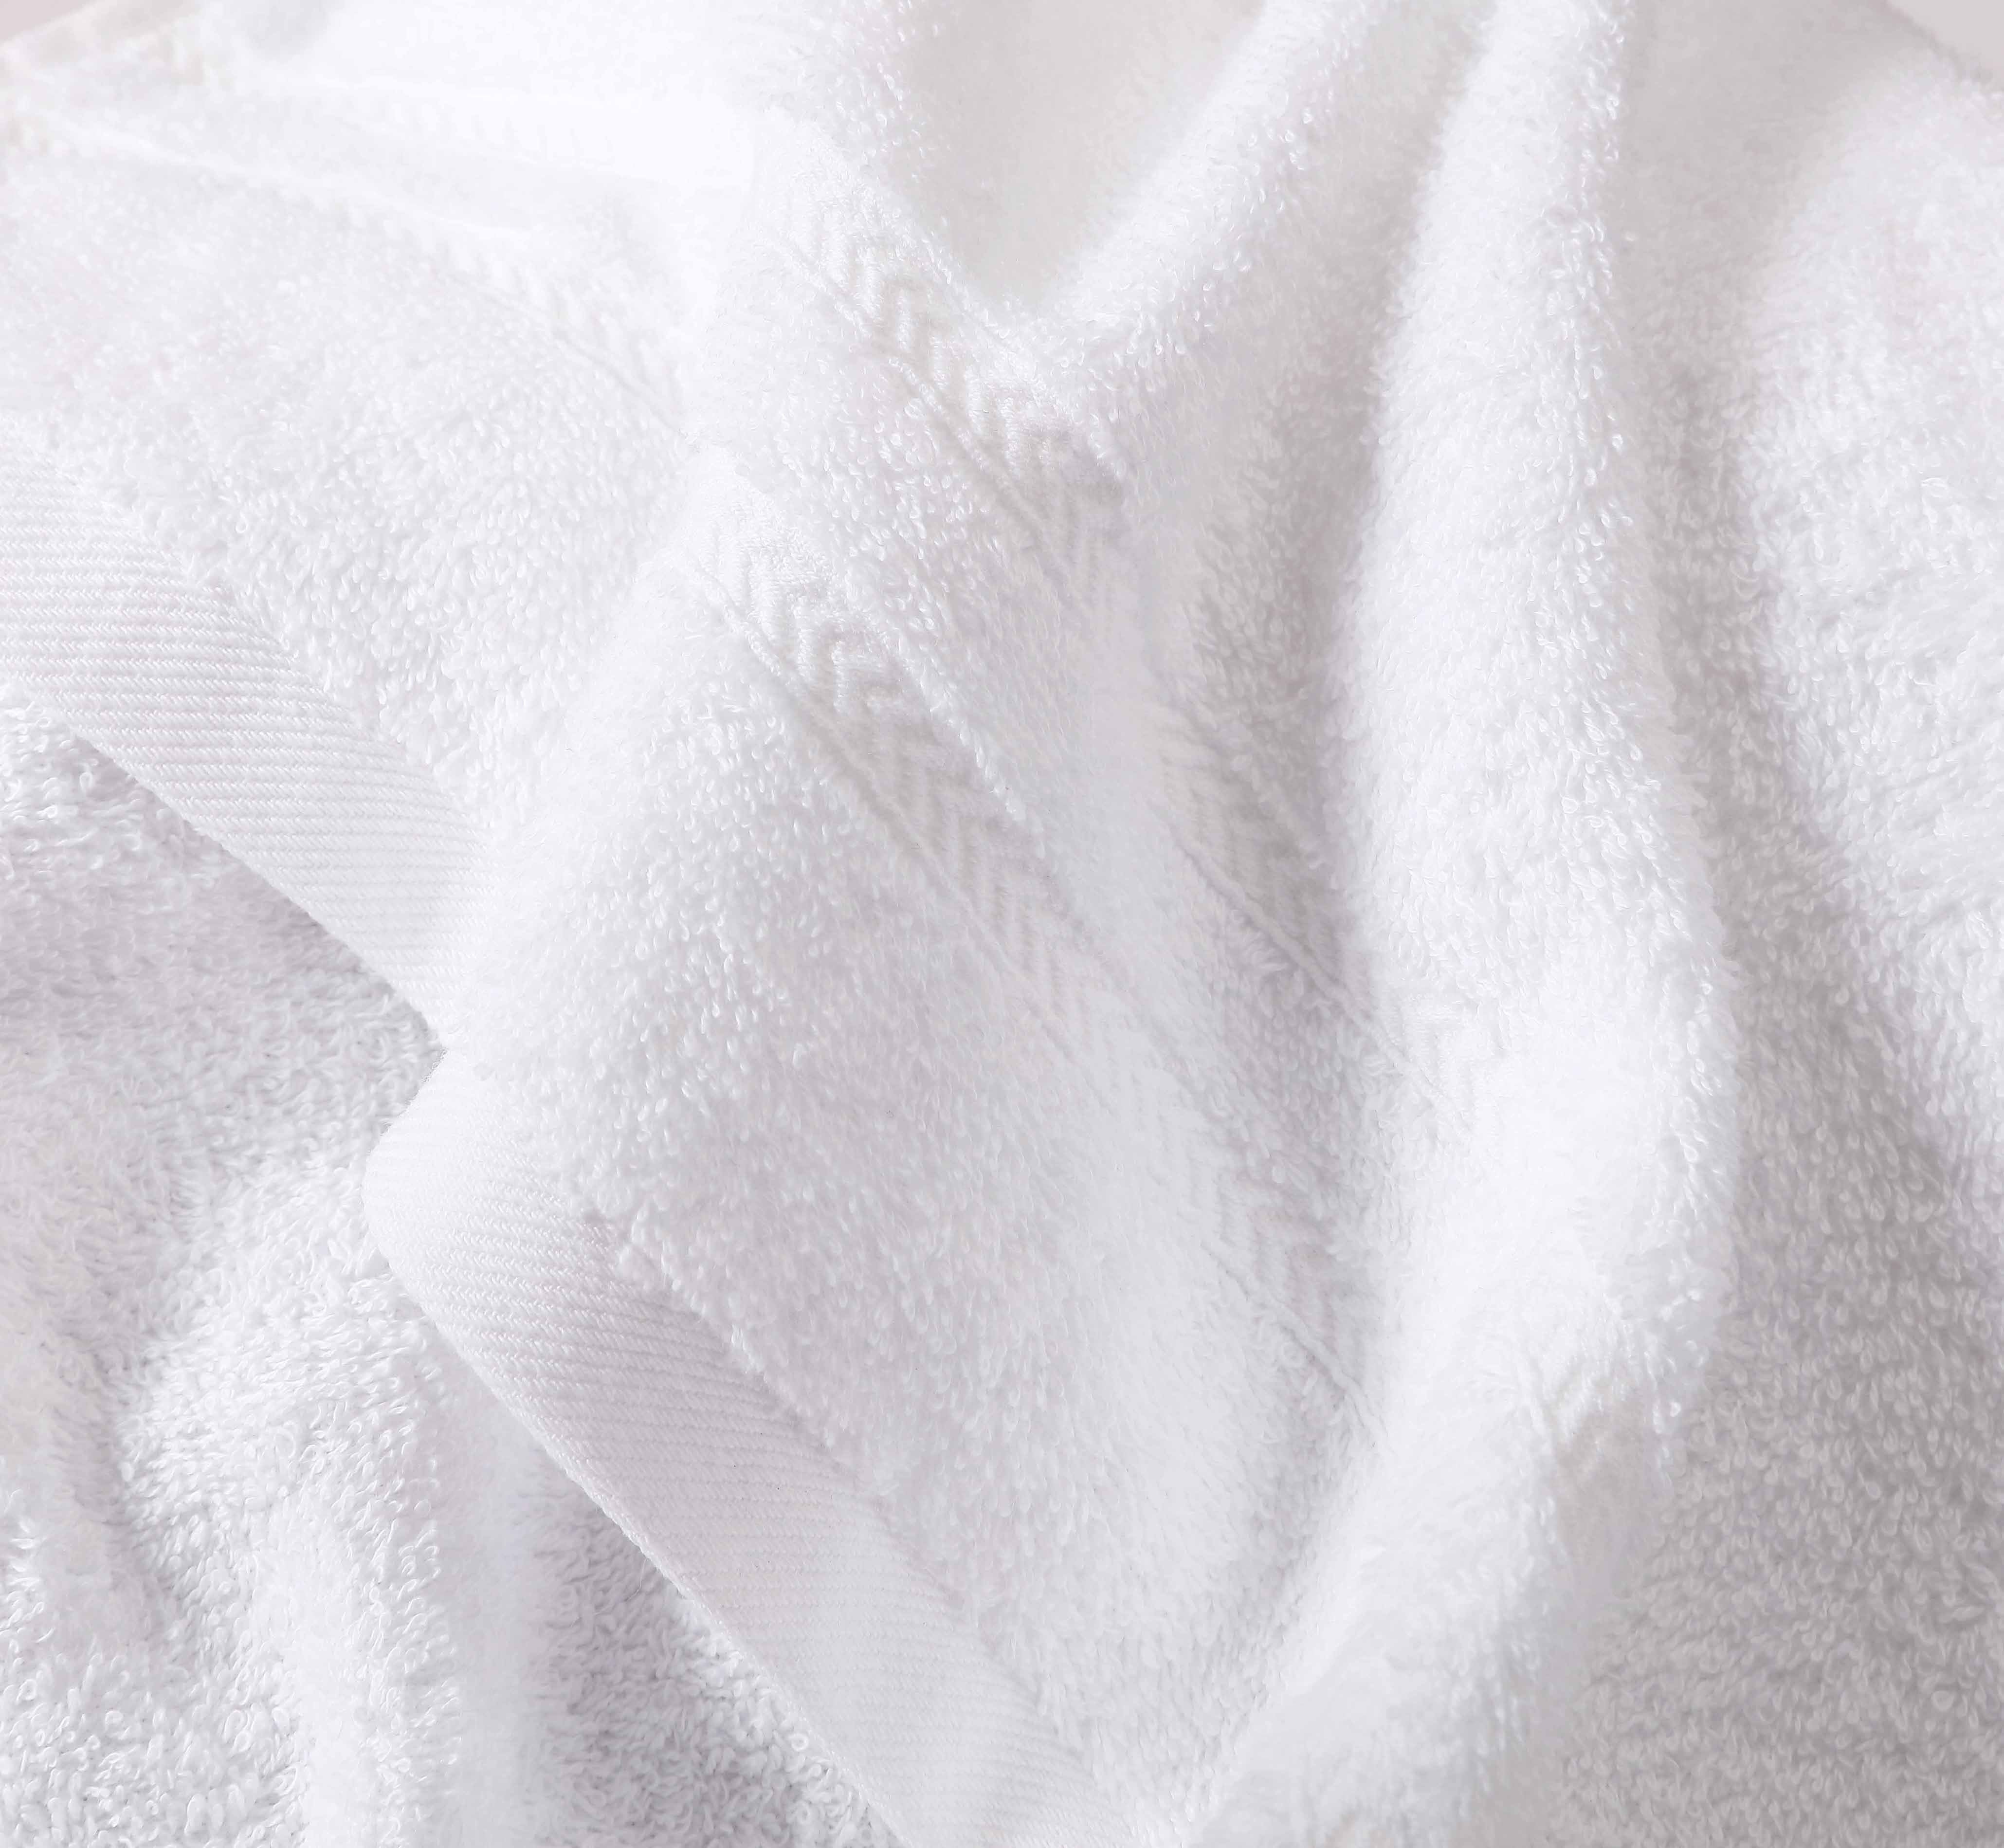 Basic White 6-Pack Bath Towel Set Shower towel Sand free towel